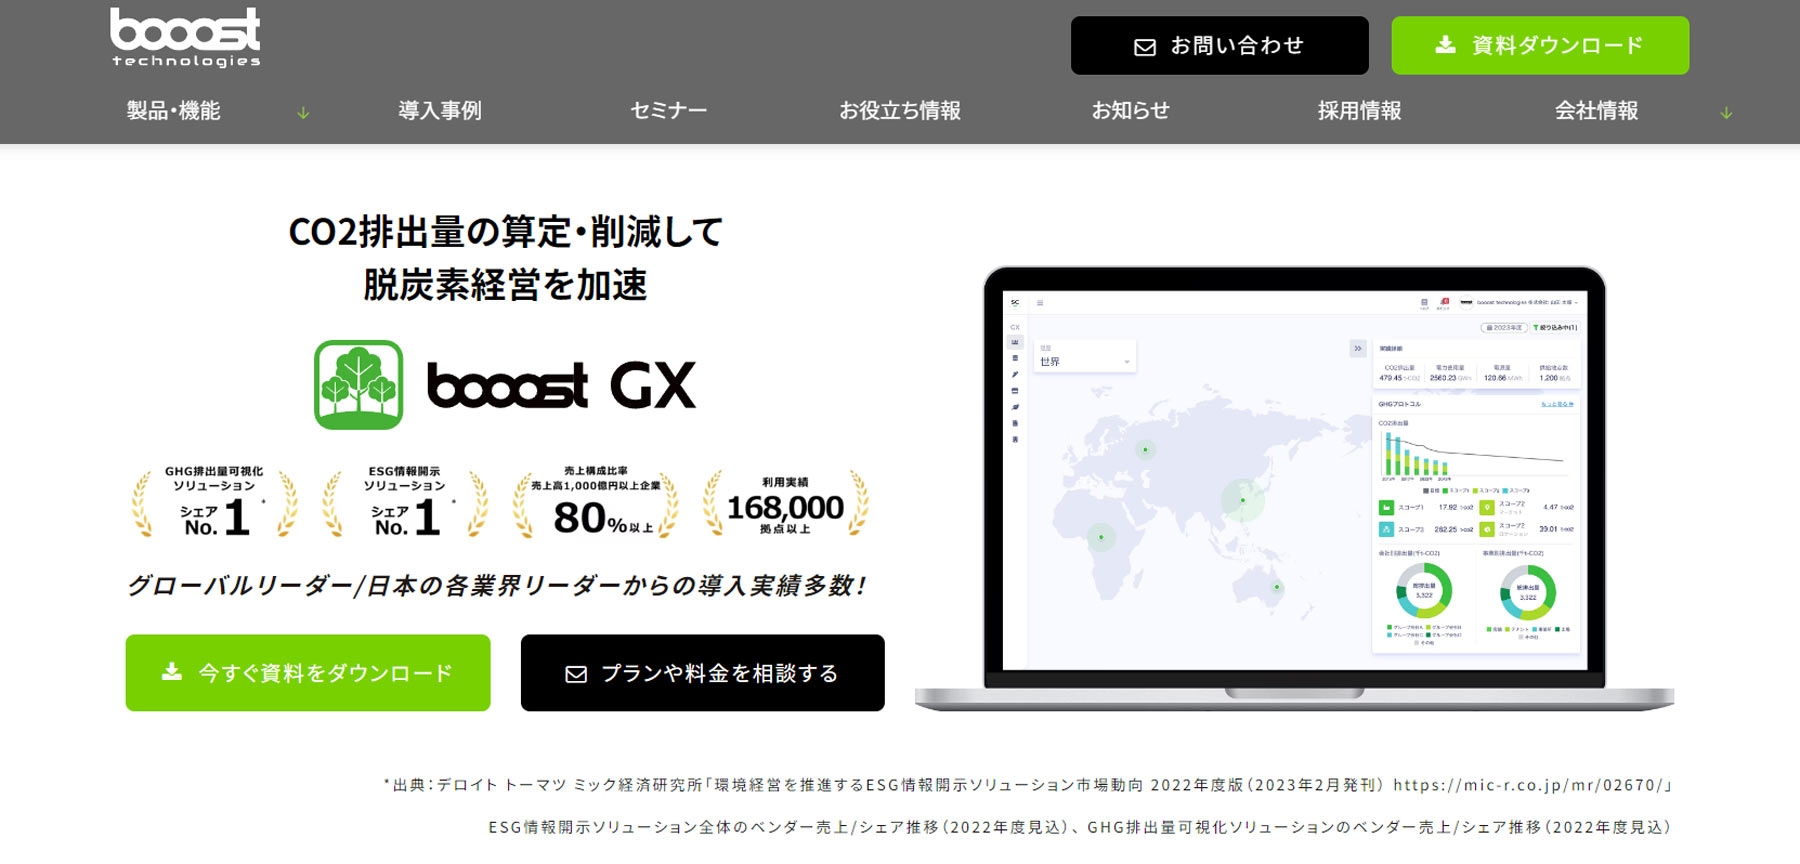 booost GX公式Webサイト